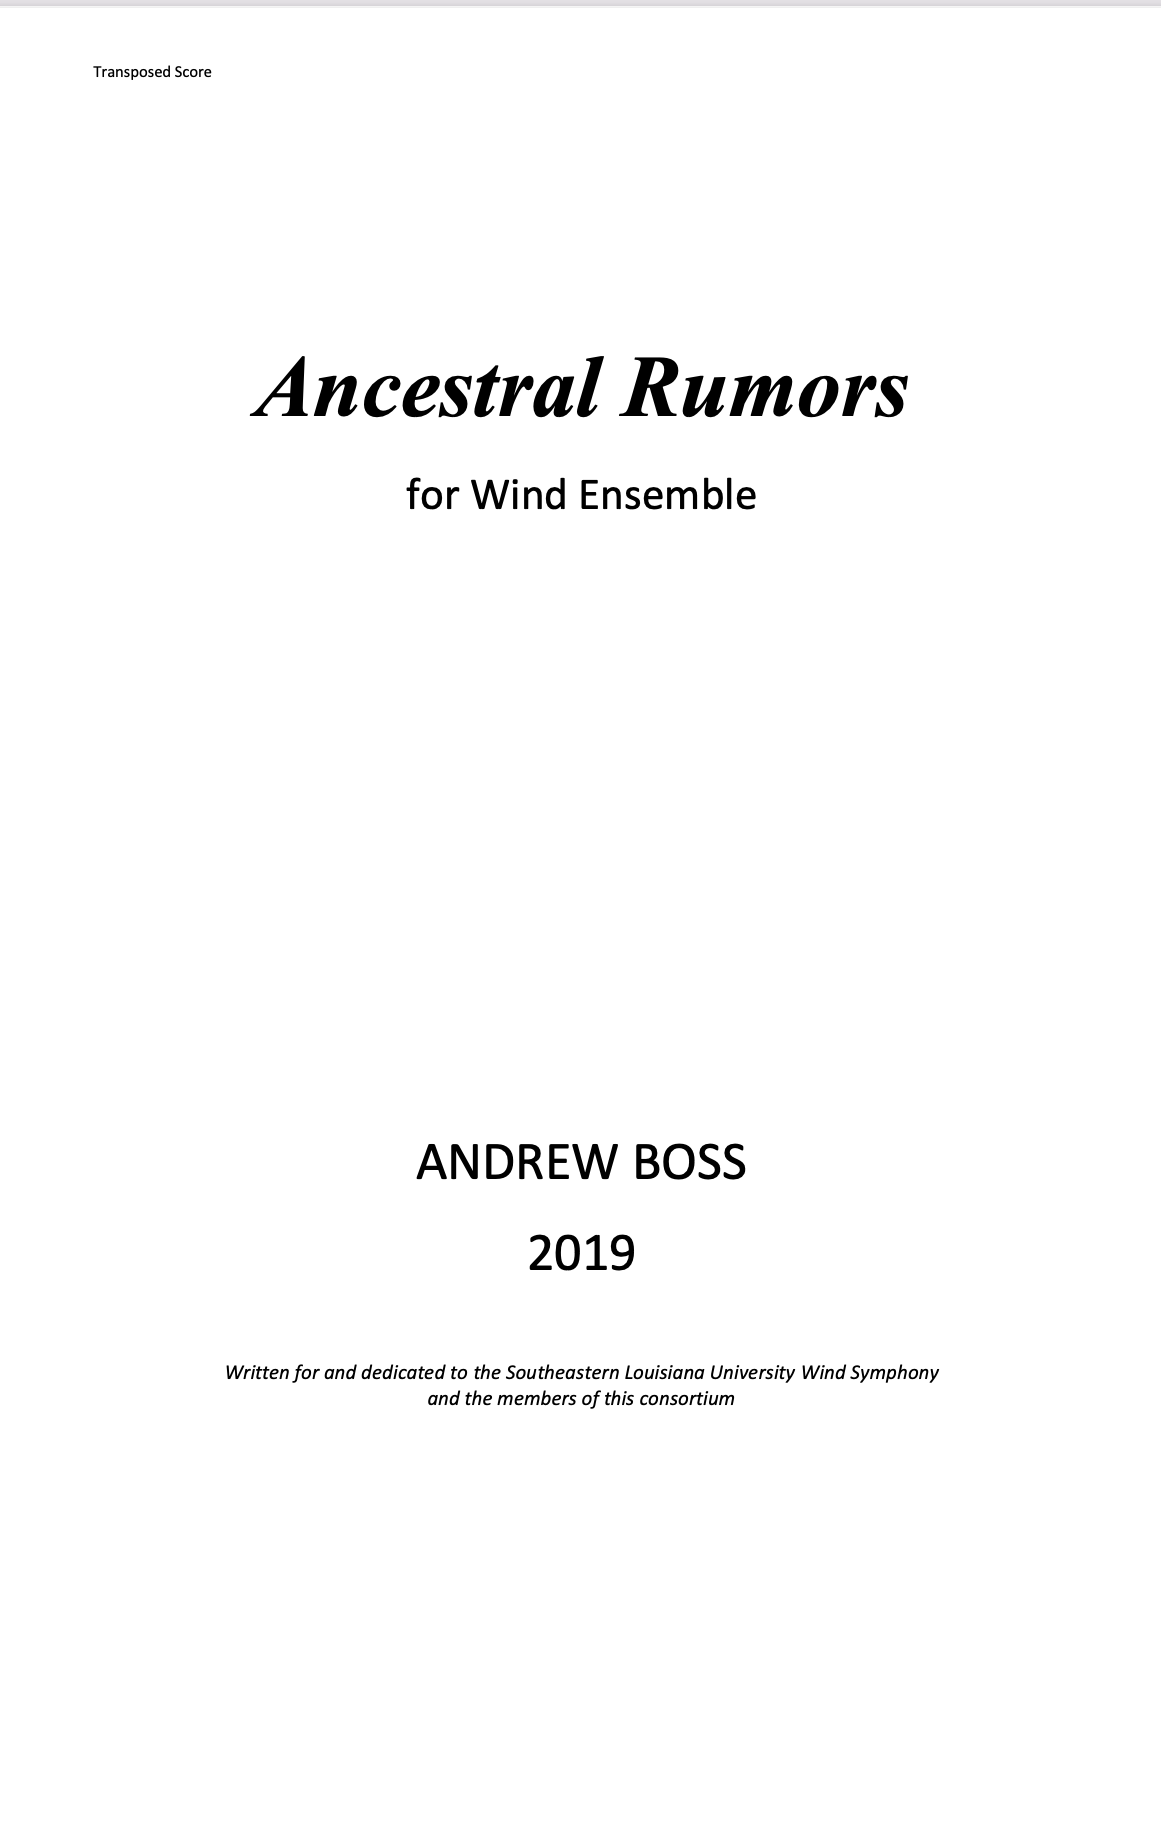 Ancestral Rumors by Andrew Boss